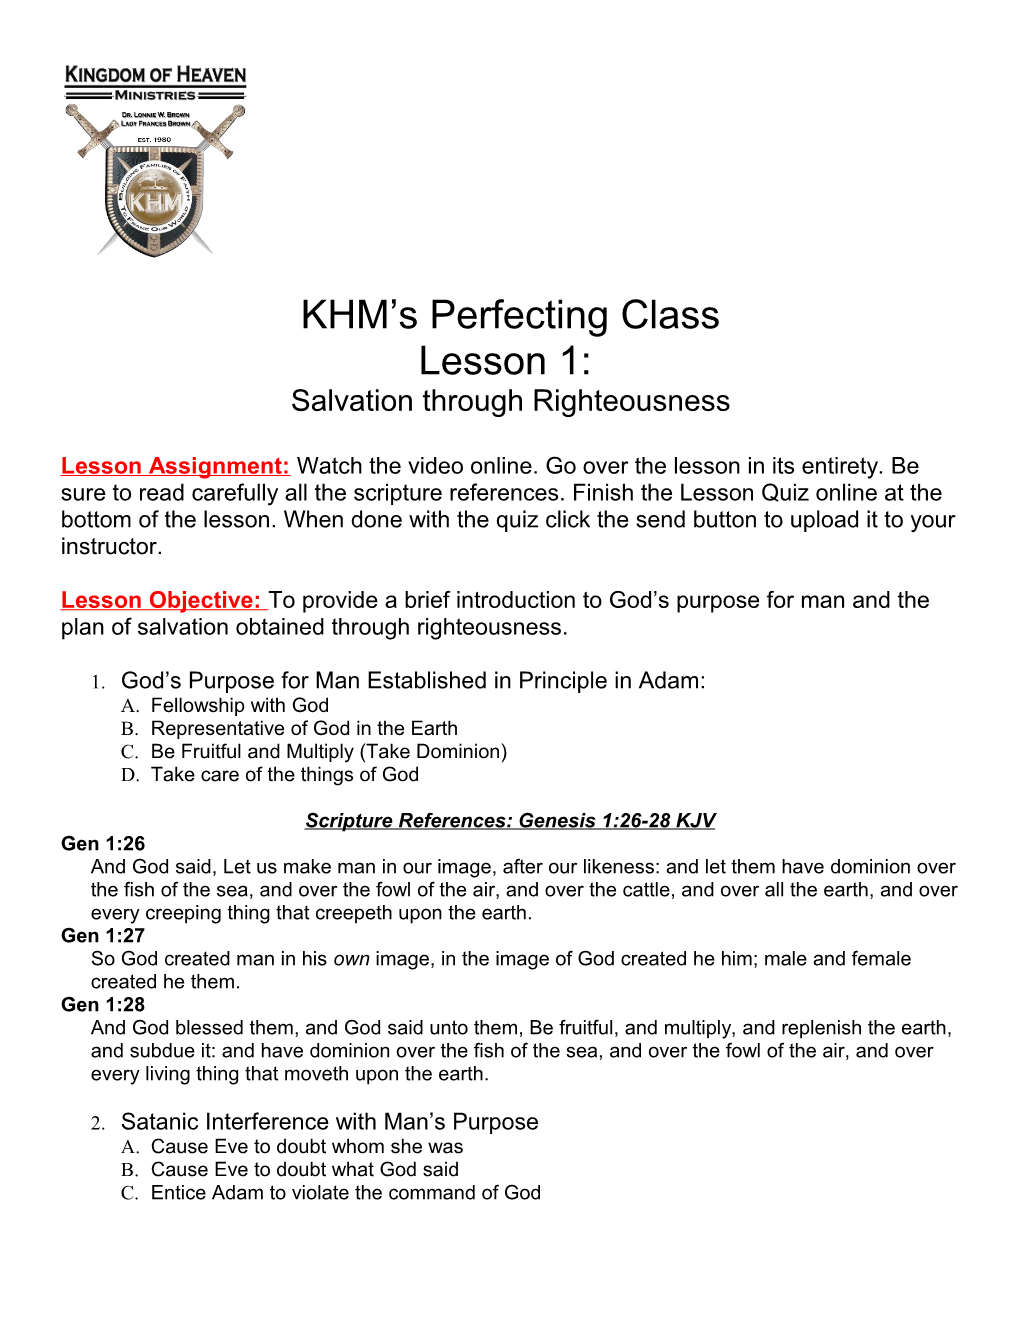 KHM S Perfecting Class